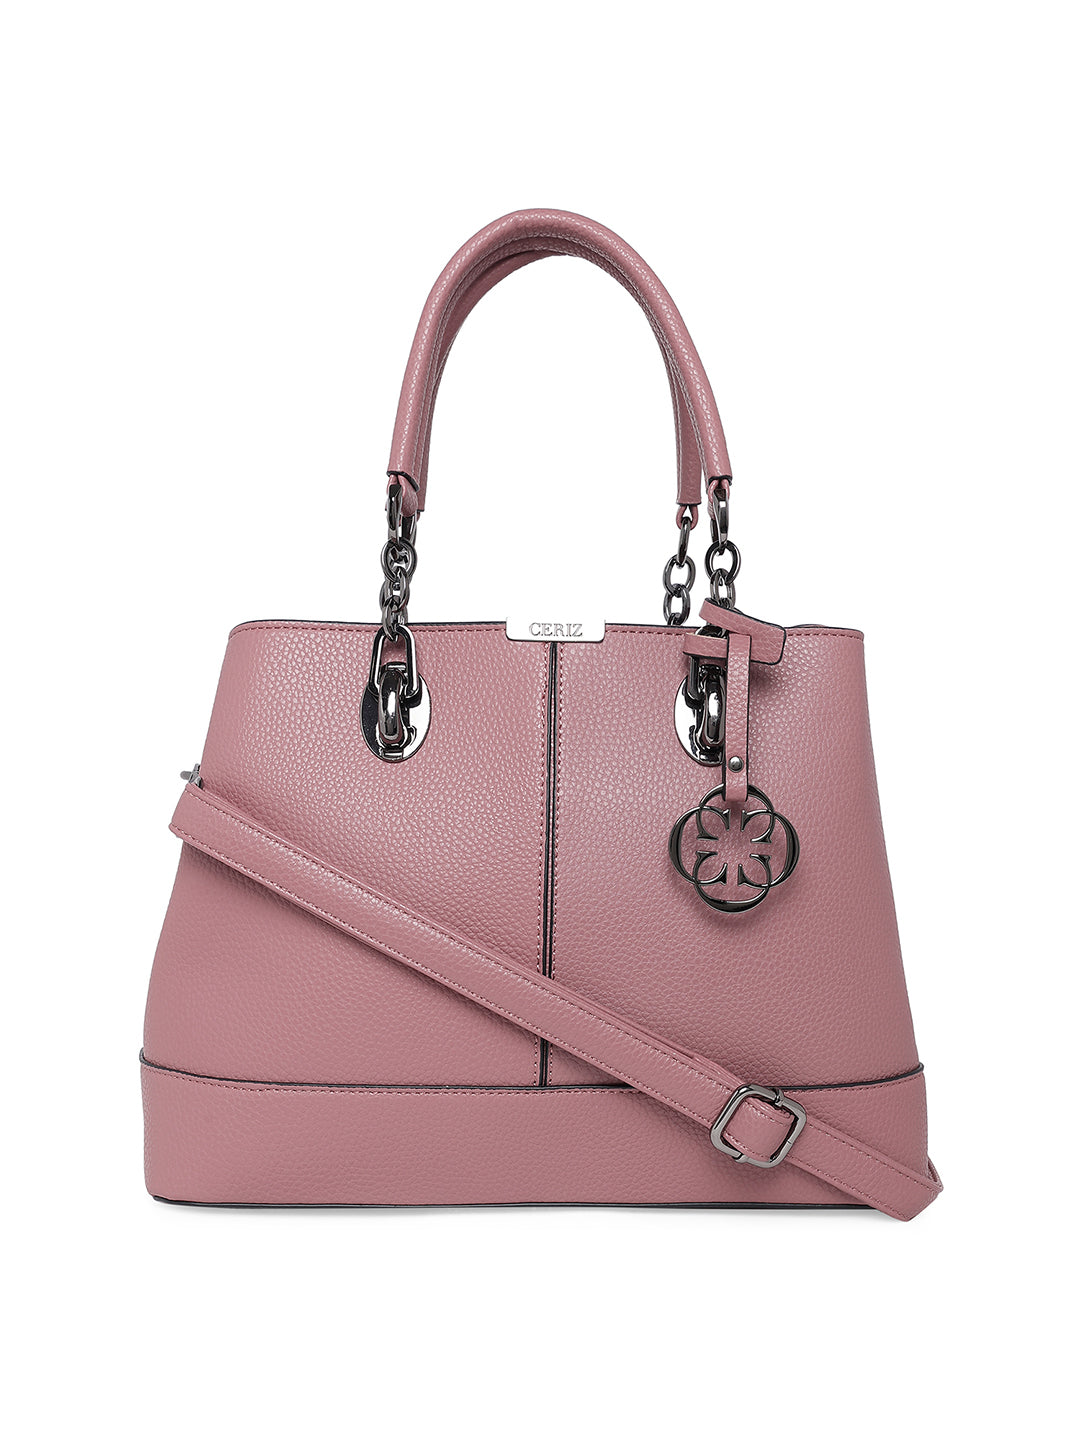 Buy Ceriz Women's Handbag (Red) (BER-H1) at Amazon.in